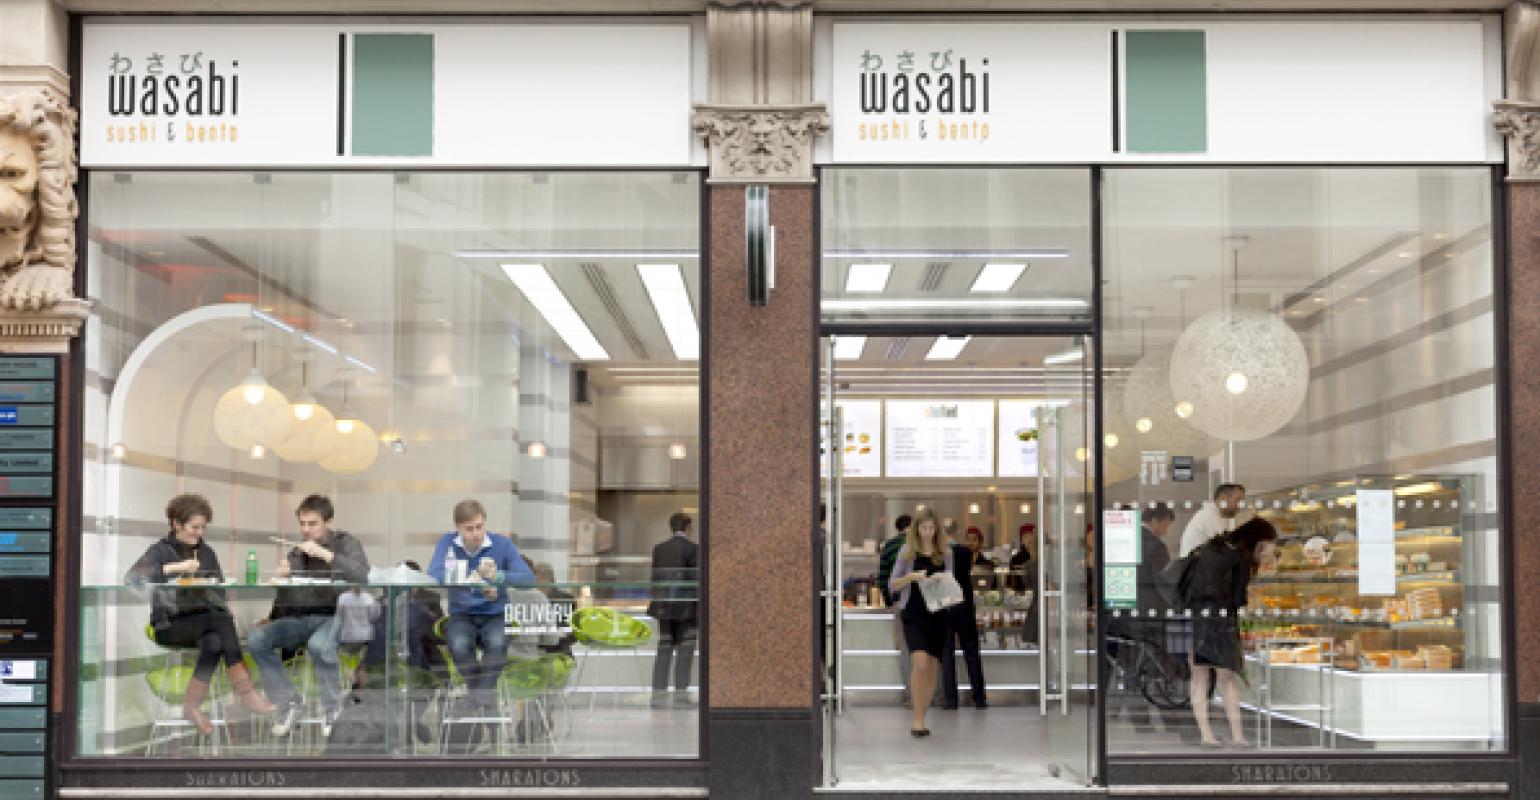 wasabi restaurant town center jacksonville fl